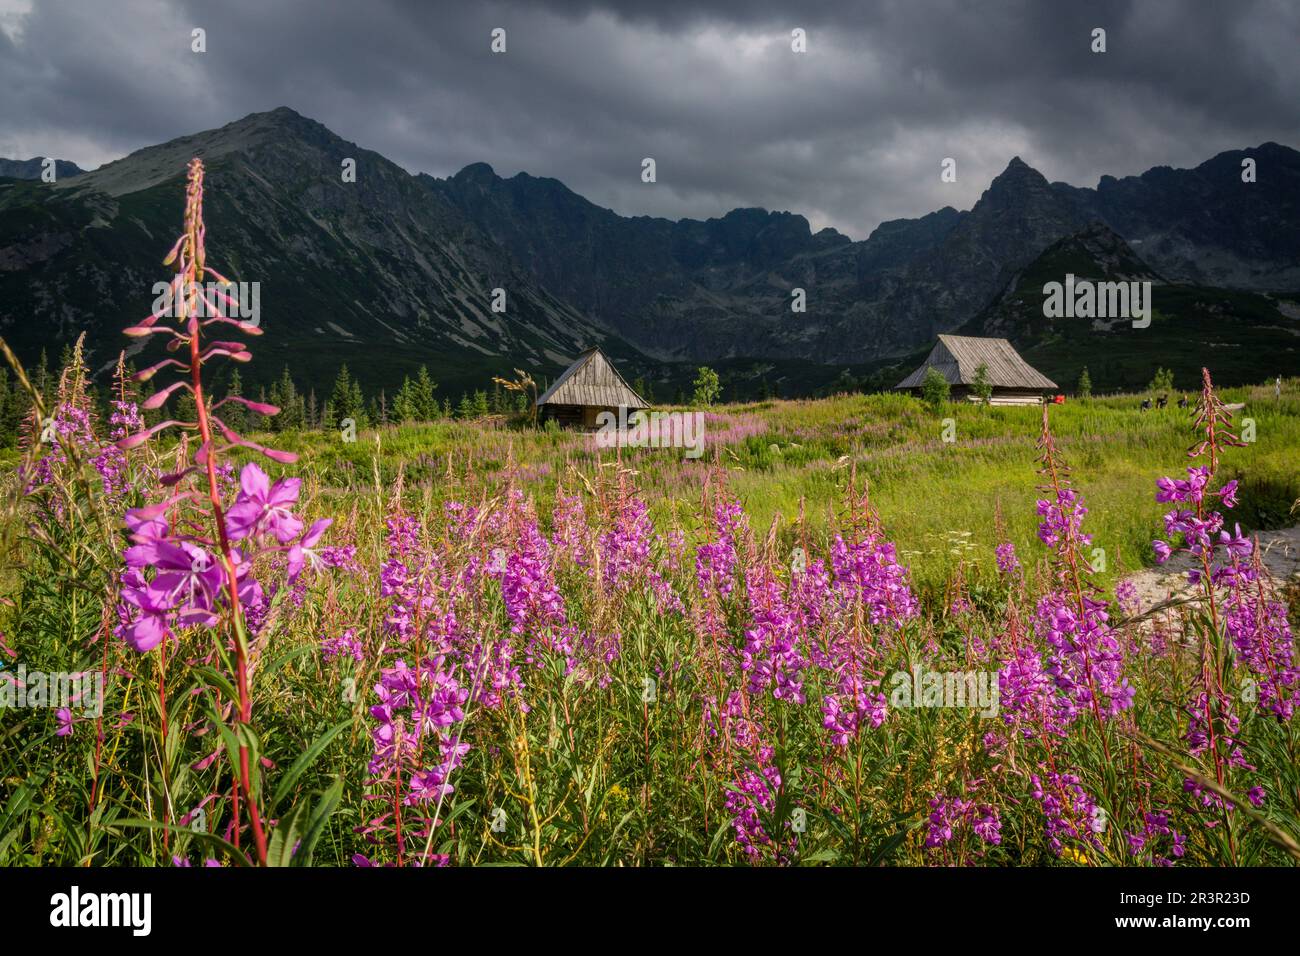 Cabaña, Valle de gasienicowa, parque nacional Tatra, voivodato de la Pequeña Polonia, Carpatos, Polonia, europe. Stock Photo